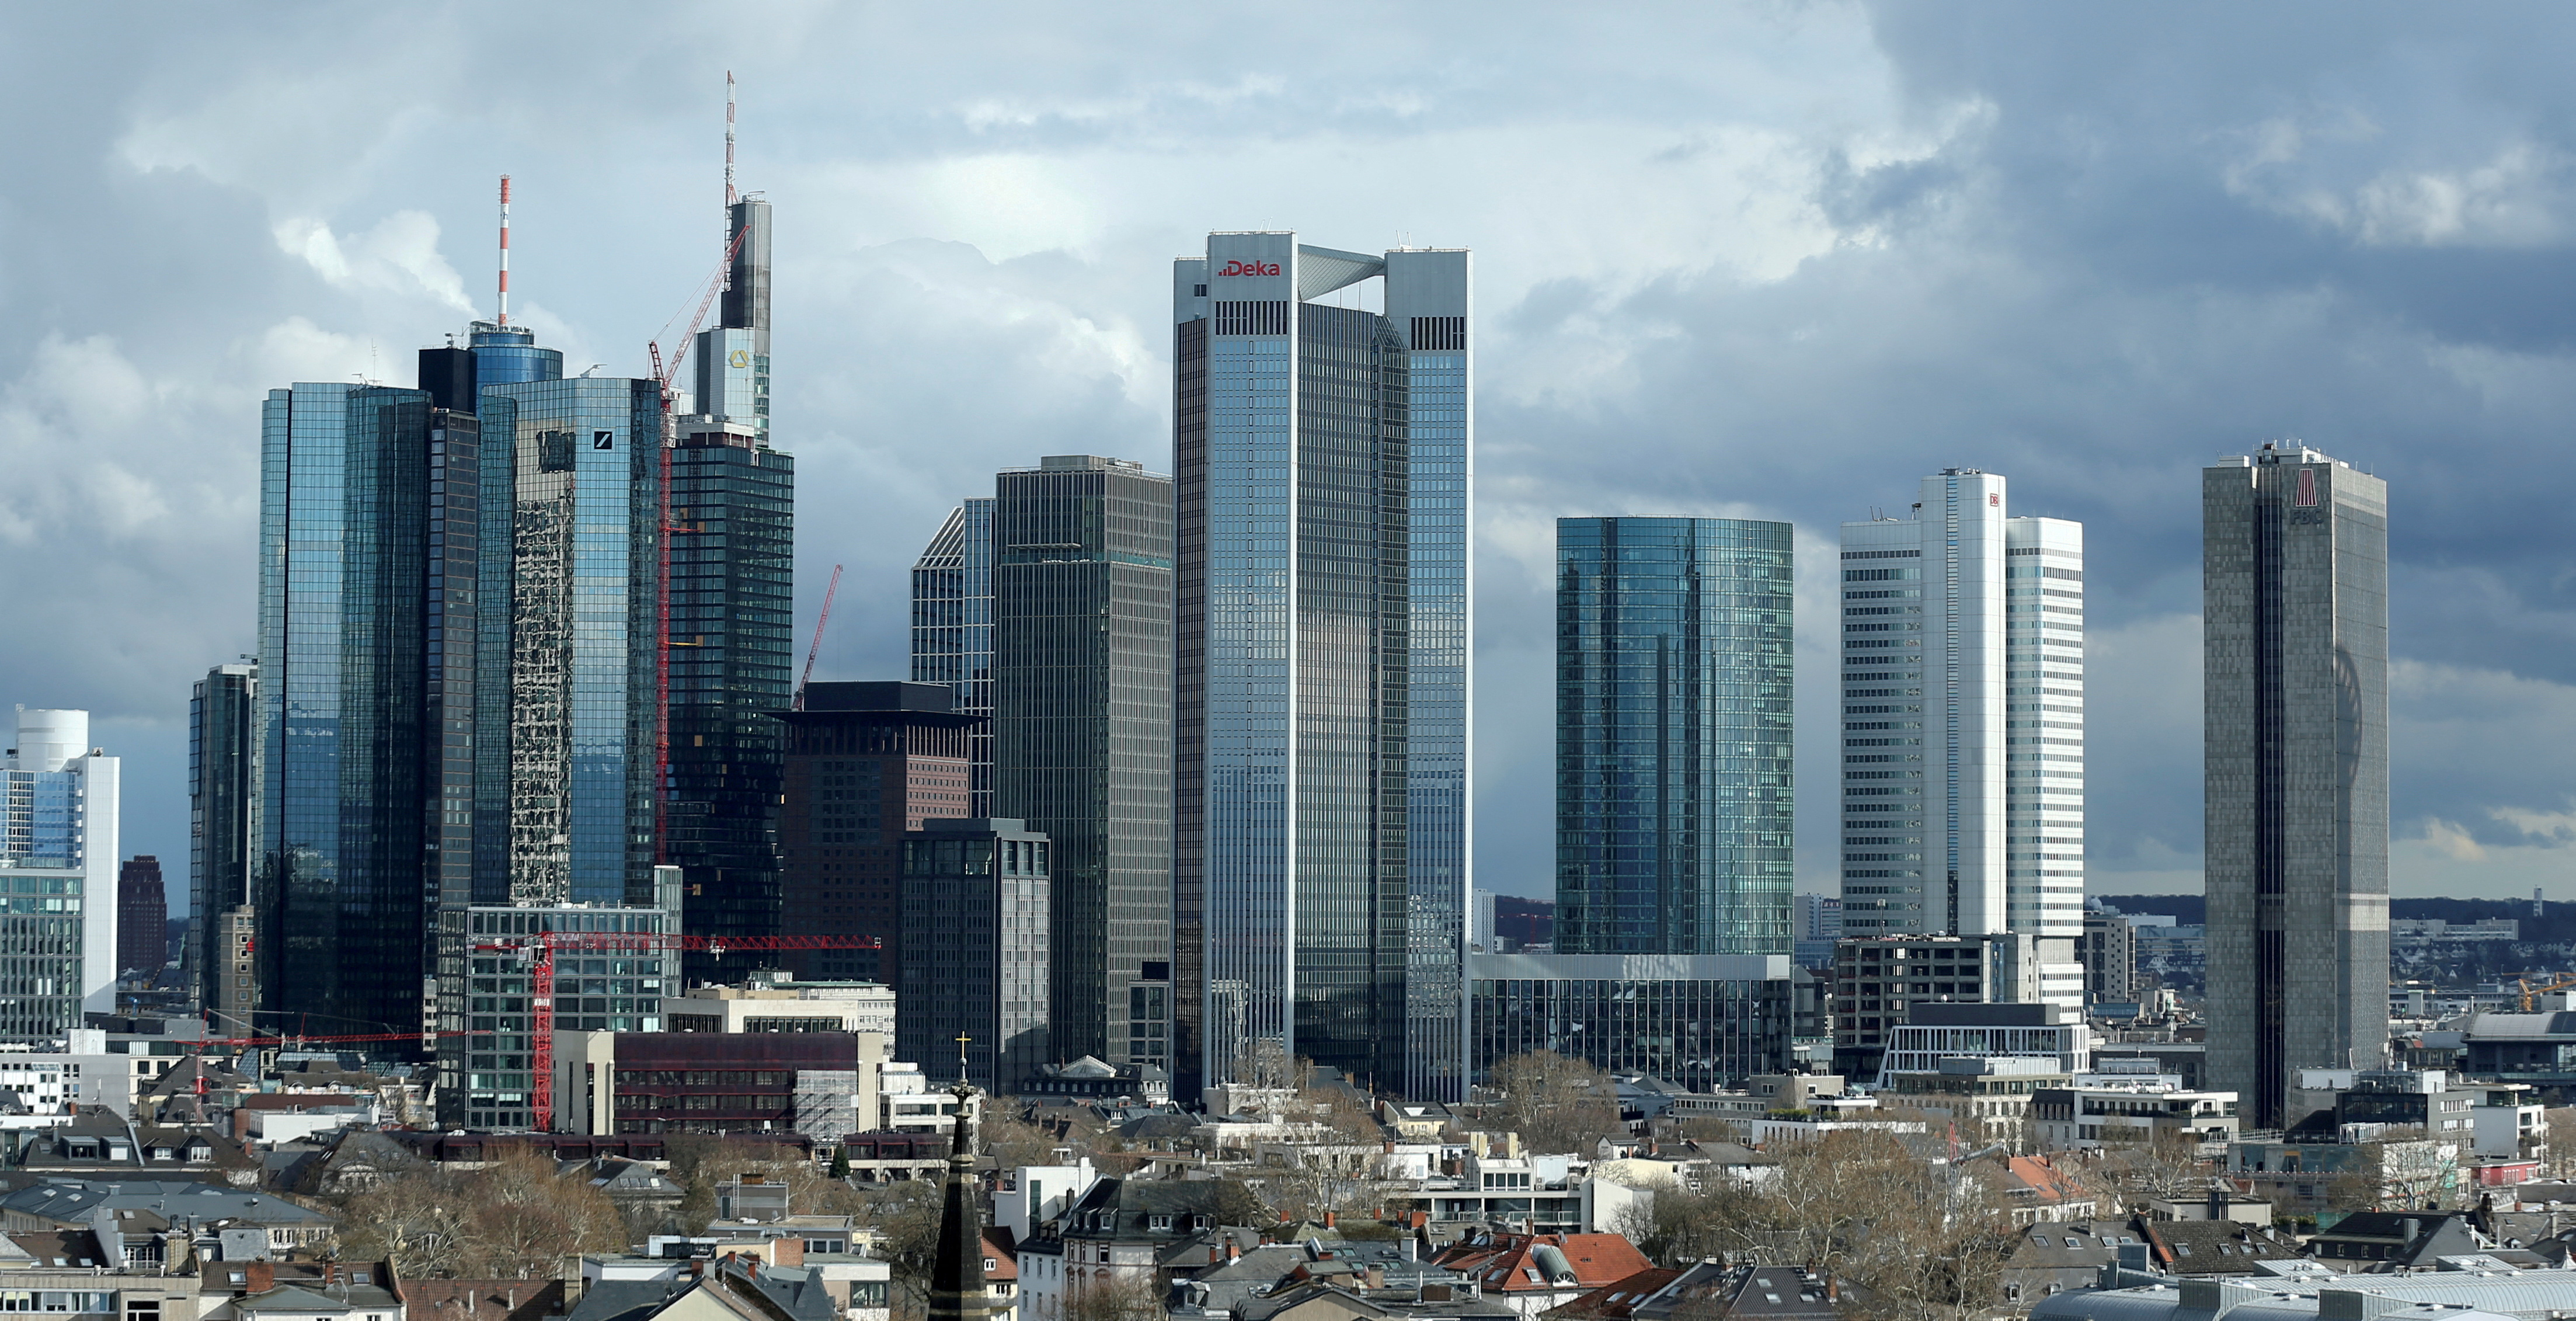 Banks in Frankfurt's financial district, Germany